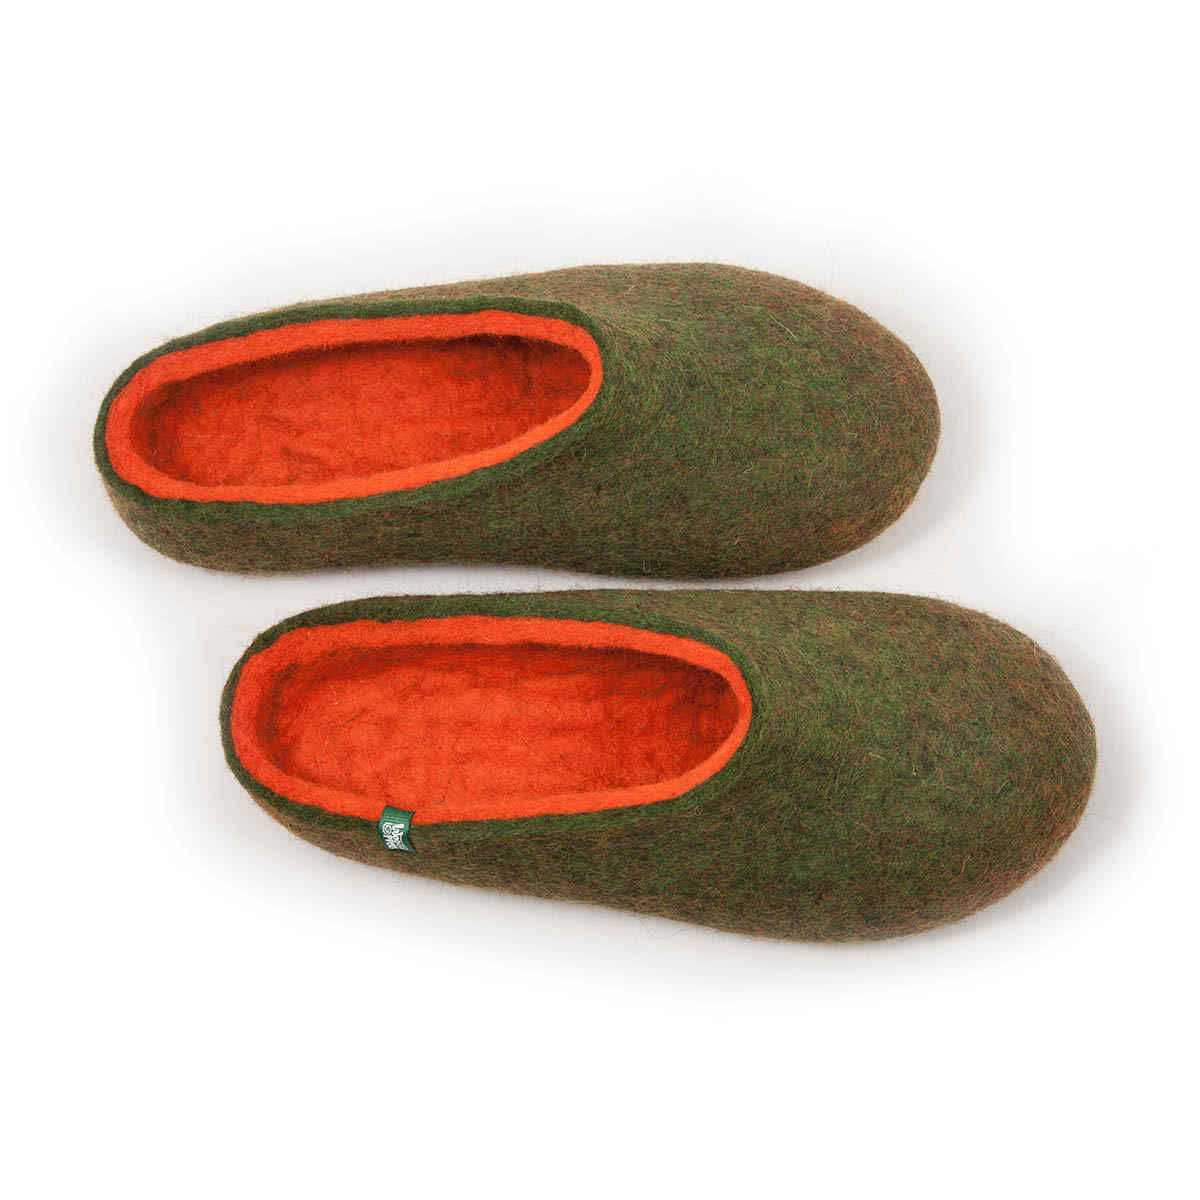 House slippers “COLORI” green – orange